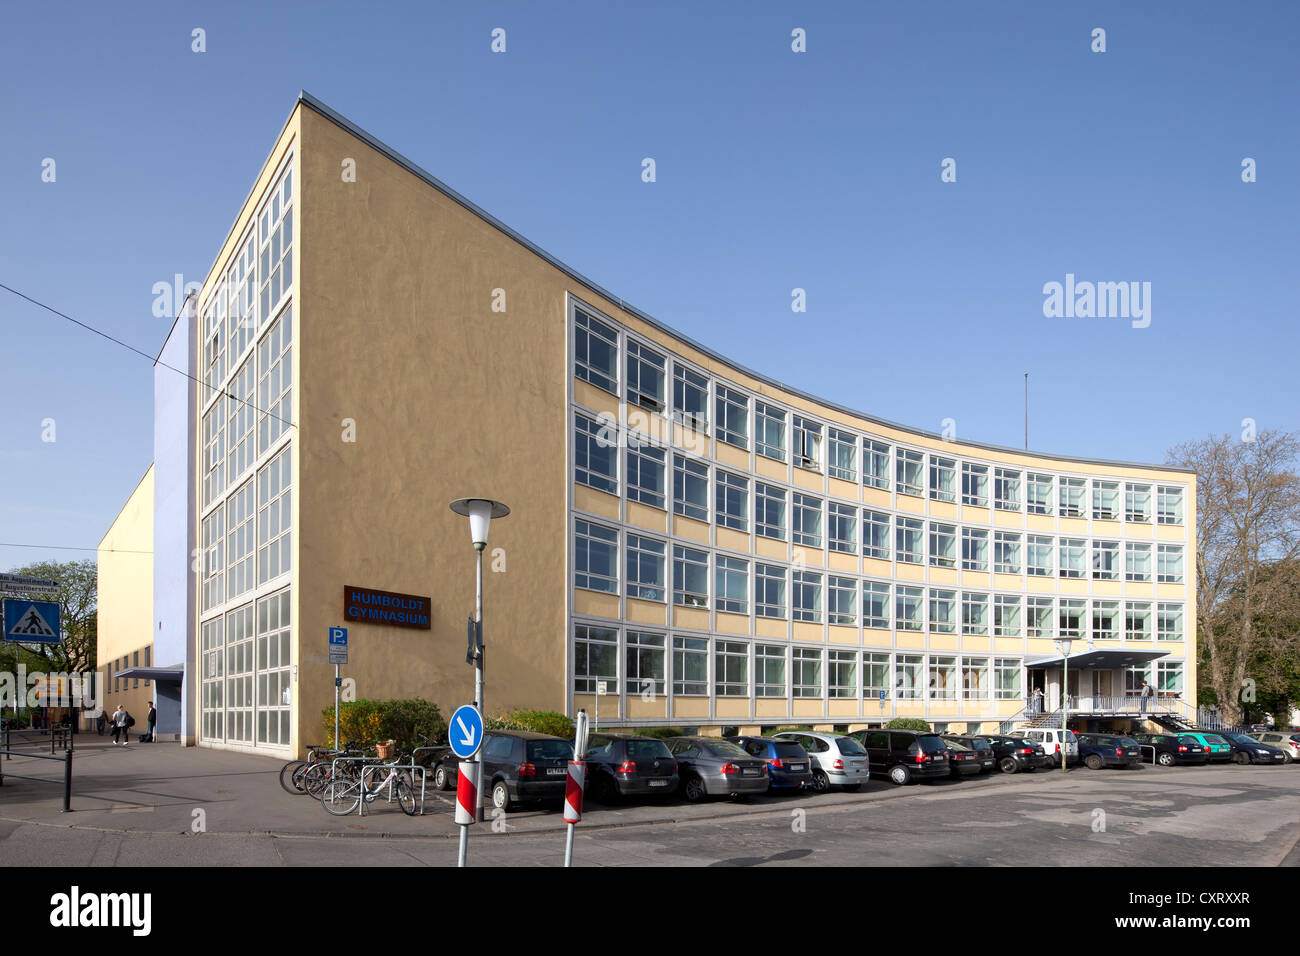 Humboldt-Gymnasium grammar school, Trier, Rhineland-Palatinate, Germany, Europe, PublicGround Stock Photo